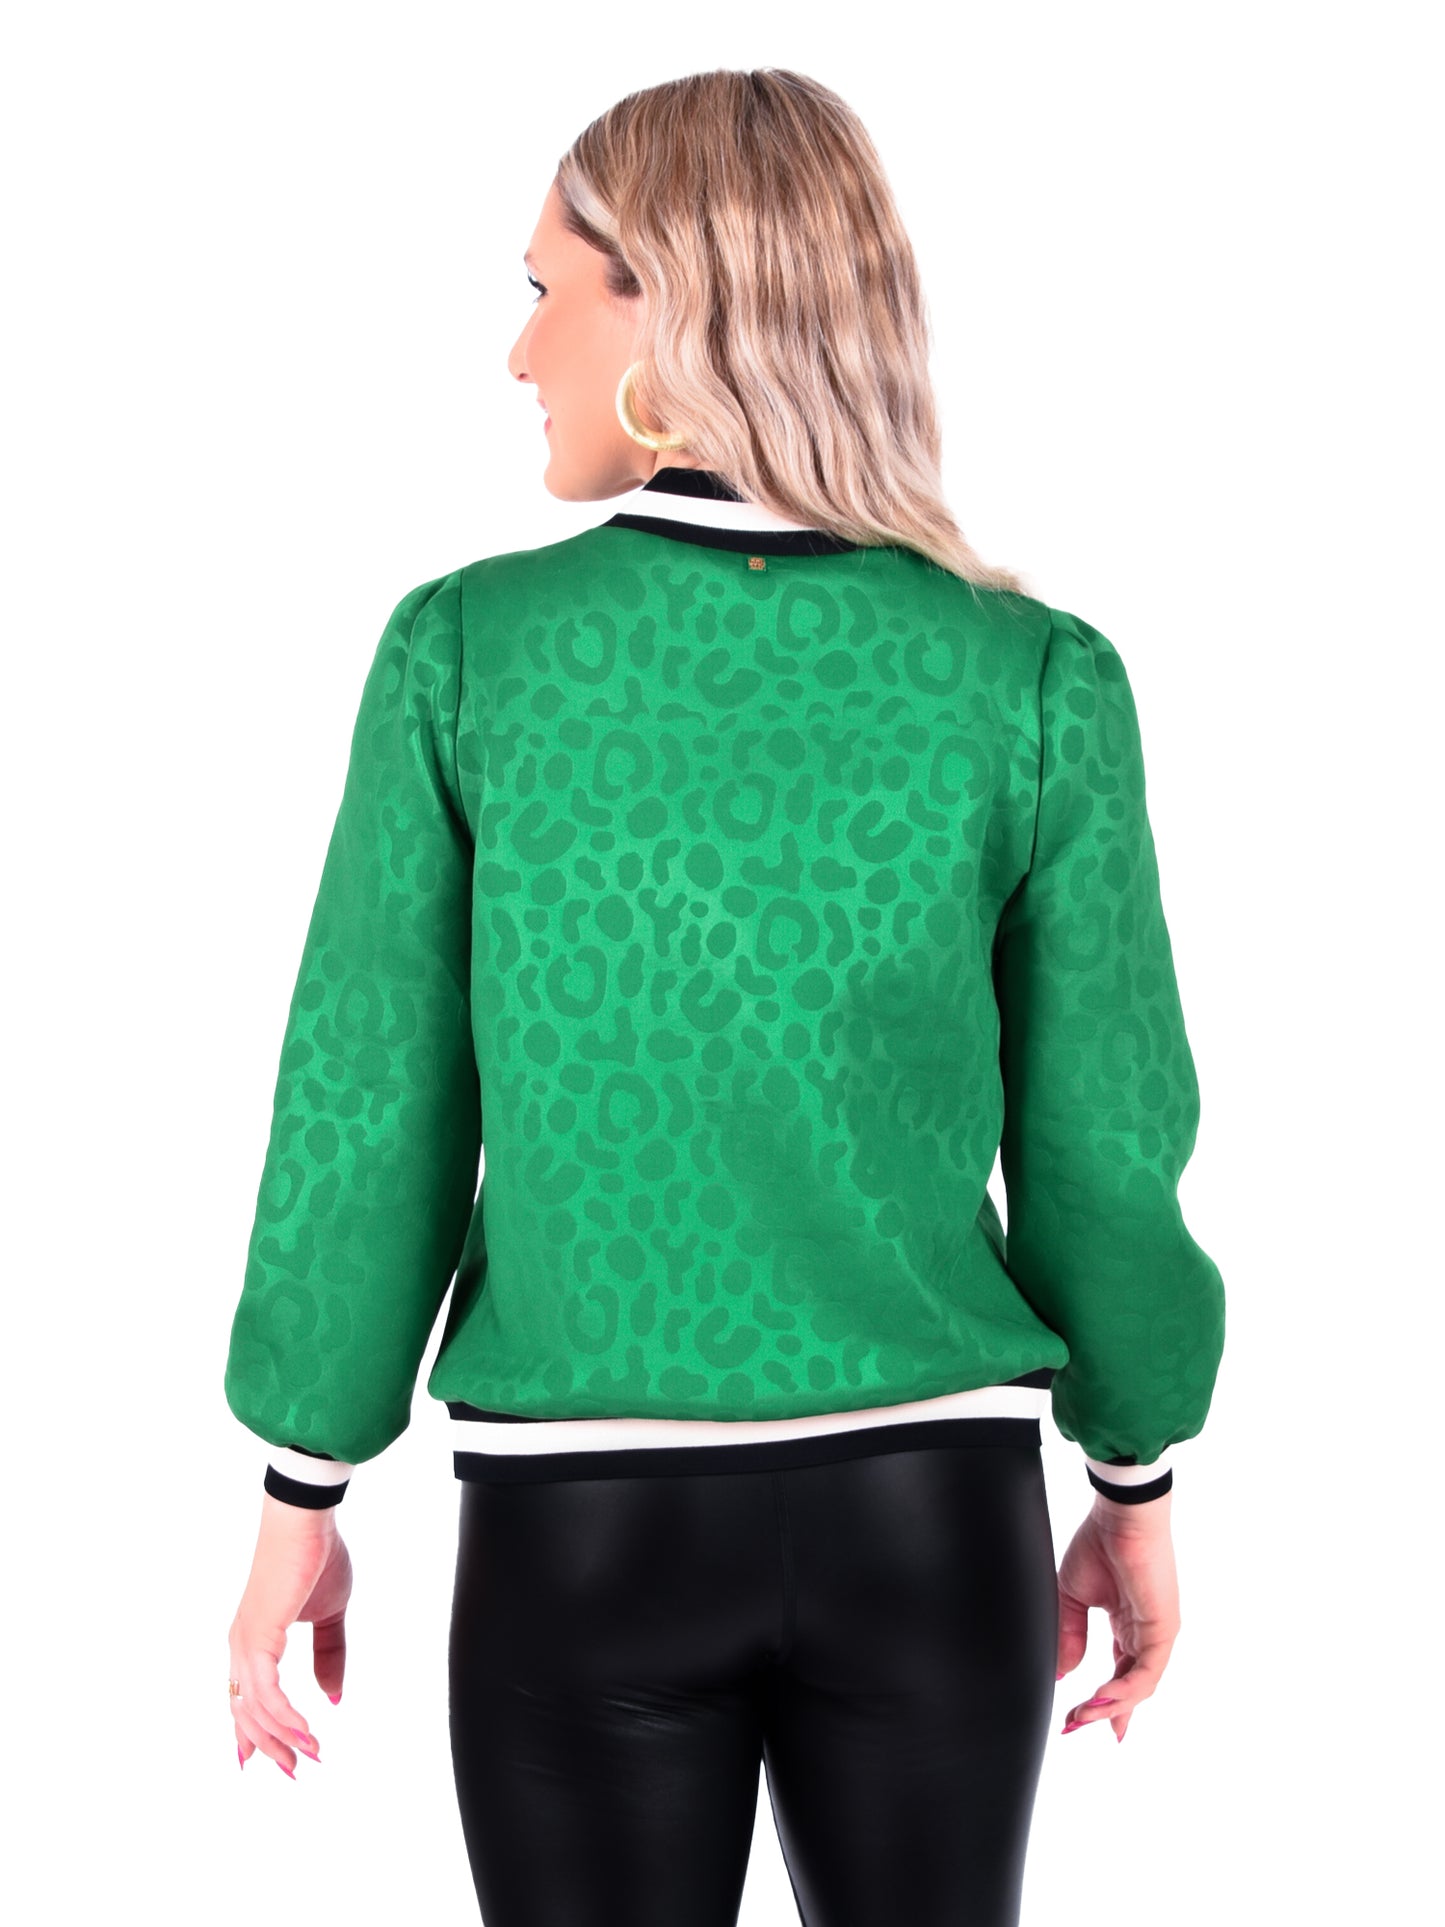 Julia Day Pullover - Evergreen Cheetah